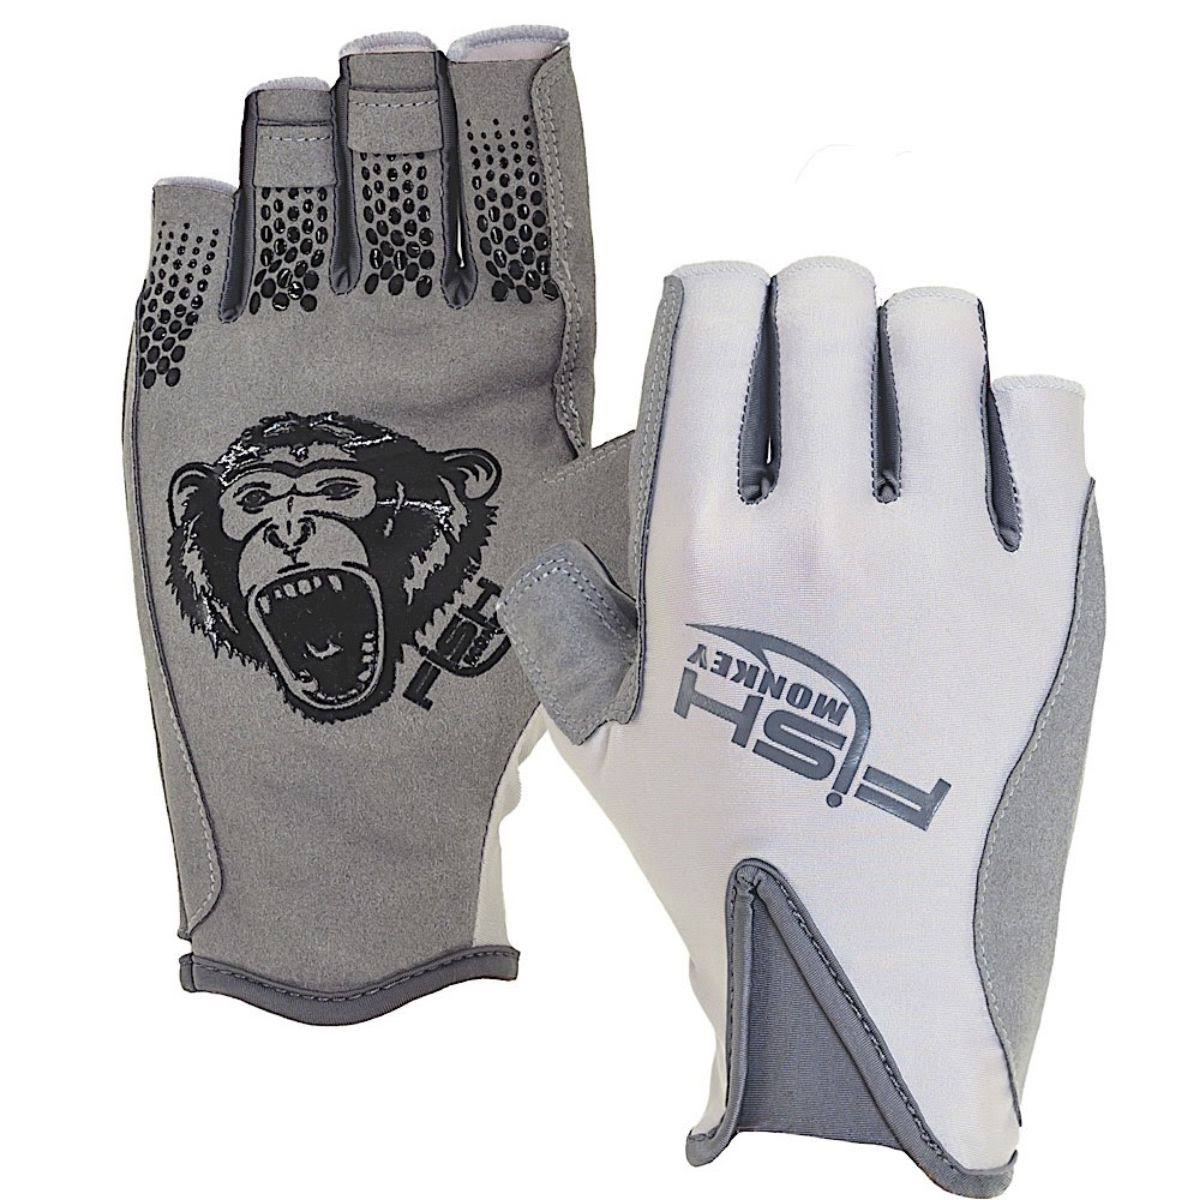 Fish Monkey Pro 365 Guide Glove - Light Grey - XL